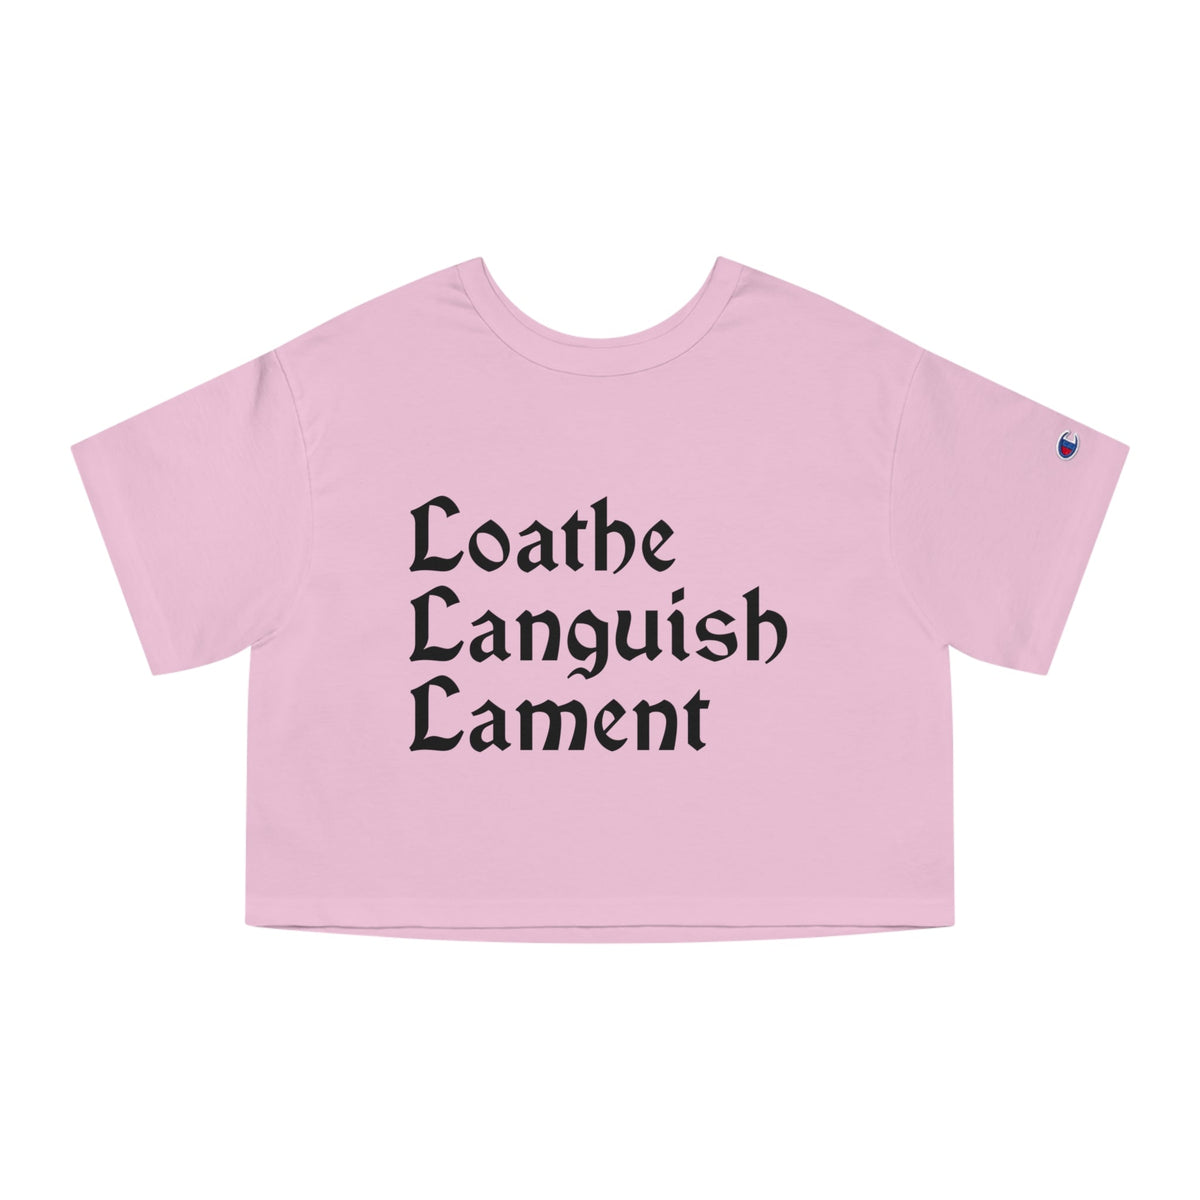 Loathe Languish Lament Heavyweight Cropped T-Shirt - Goth Cloth Co.T-Shirt17128693727010840485